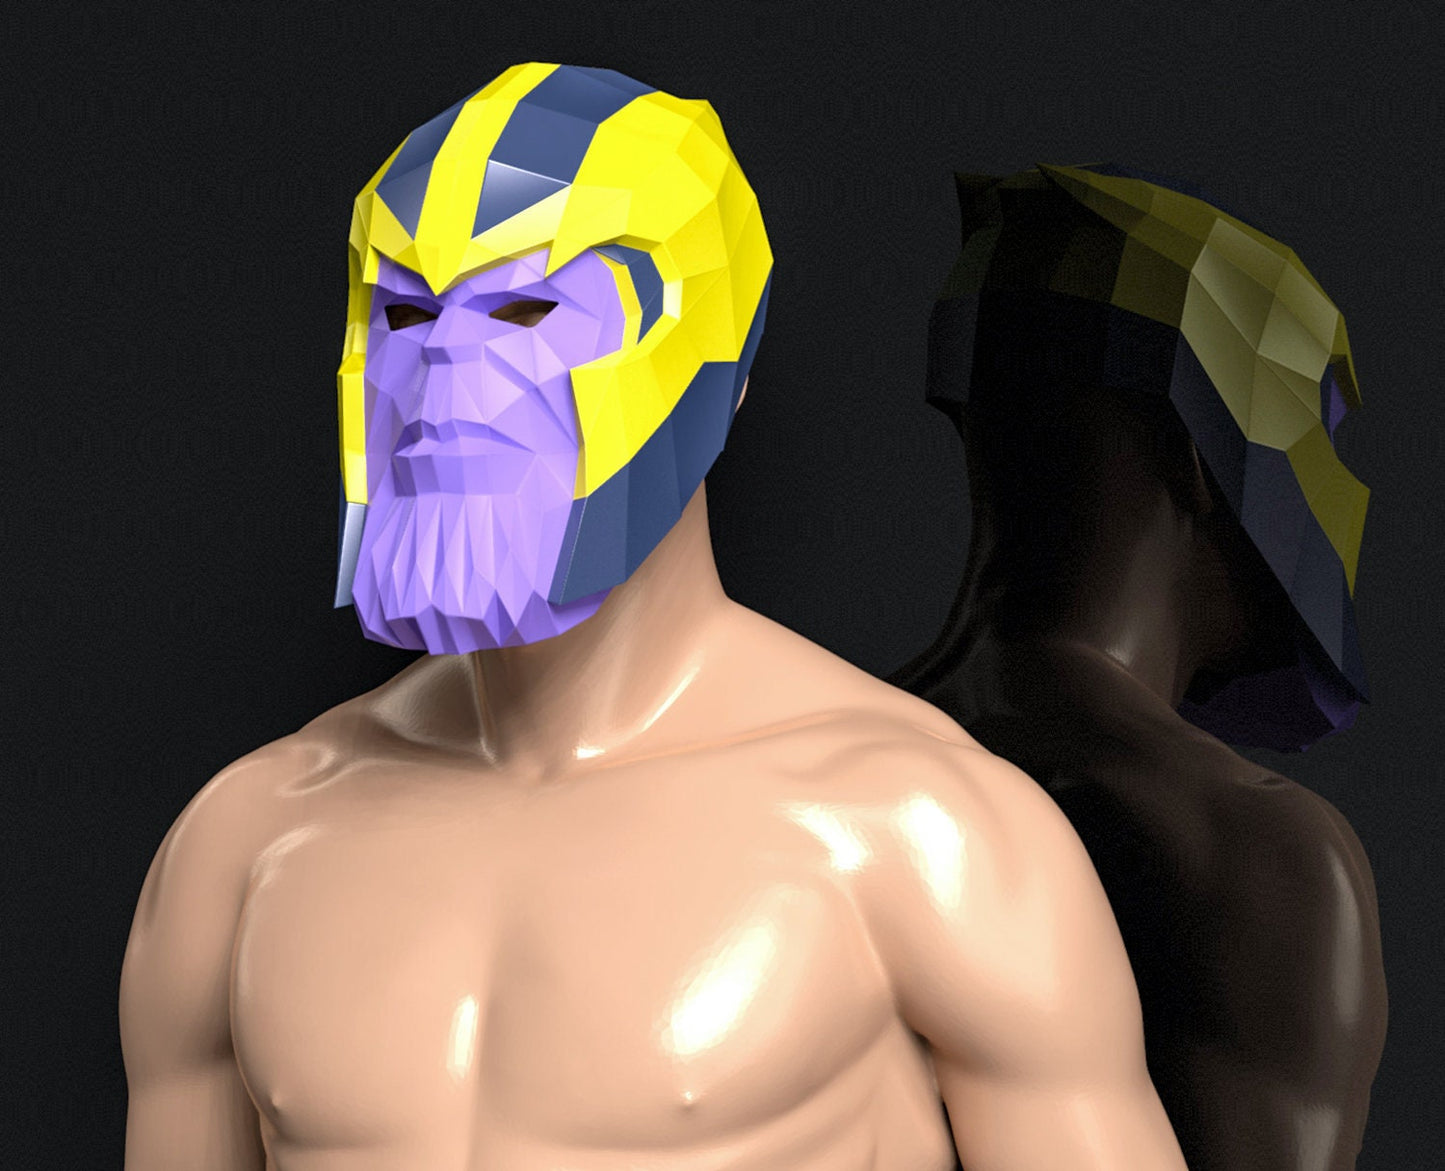 Thanos mask